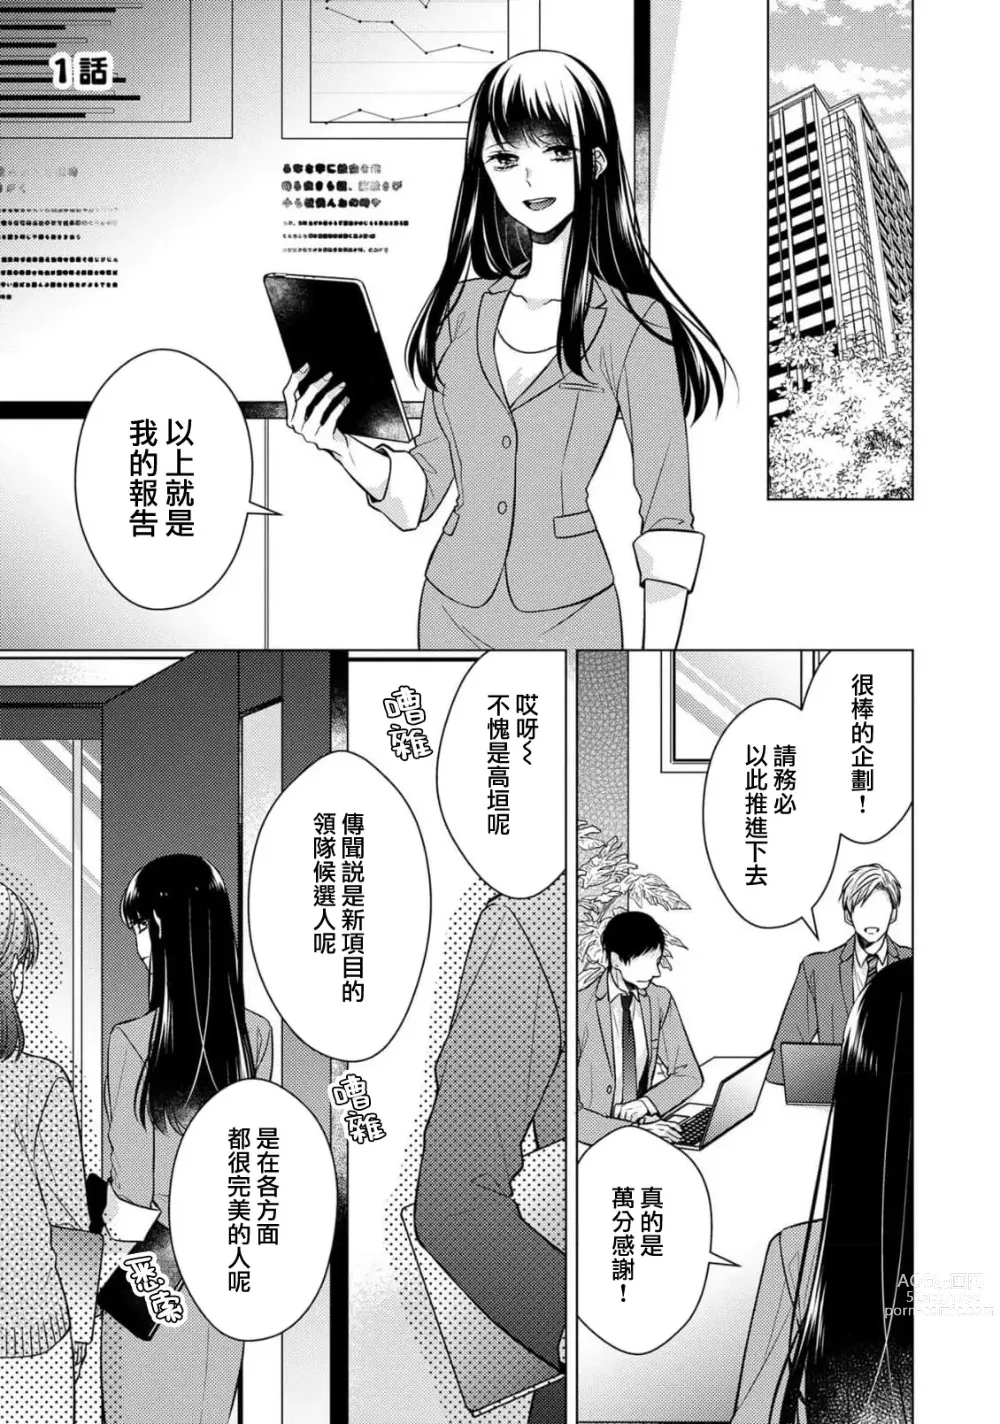 Page 4 of manga 宠爱王子和处女少女~30岁还是处女，这一次和真壁社长签订了炮友契约~ 1-5 end